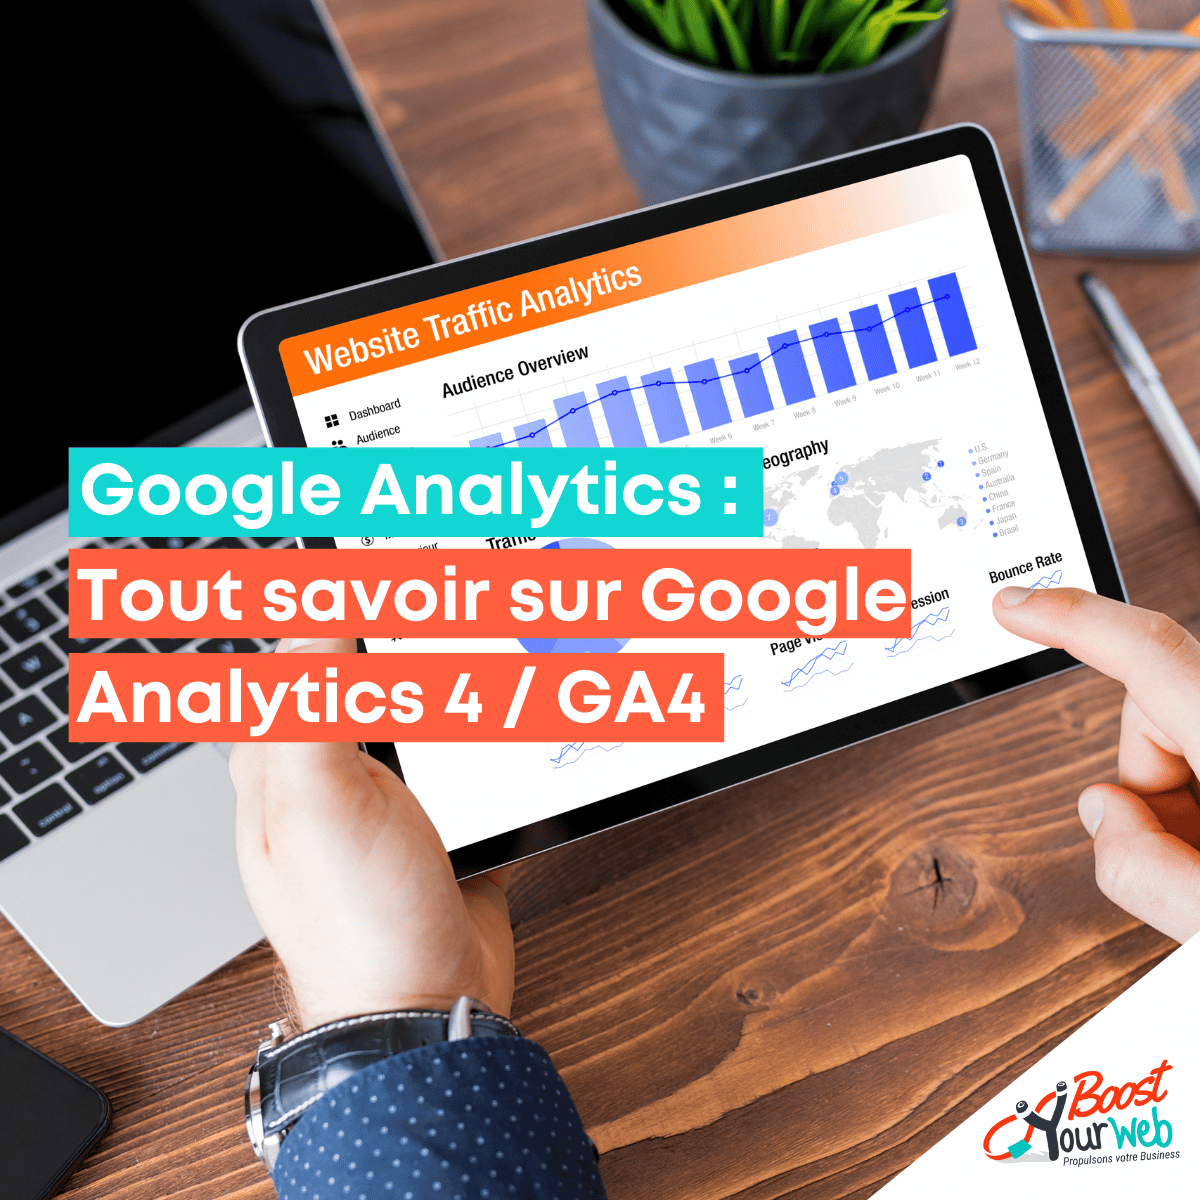 Tout savoir sur Google Analytics 4 / GA4